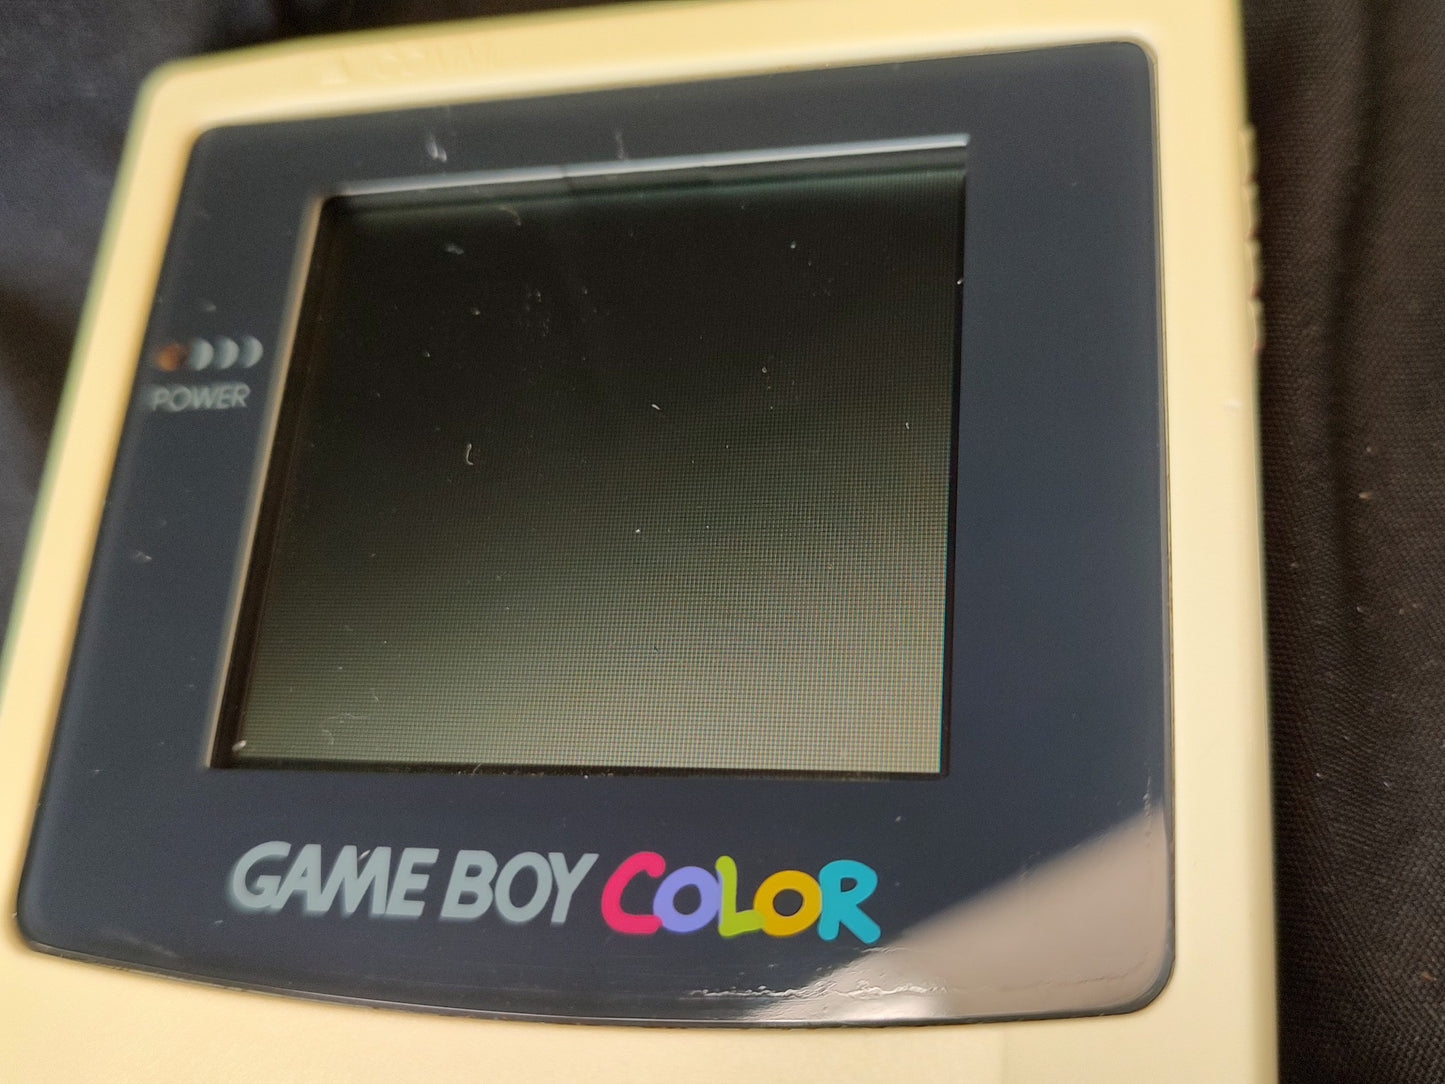 Nintendo Gameboy Color CARD CAPTOR SAKURA Limited edition console Boxed -g0122-